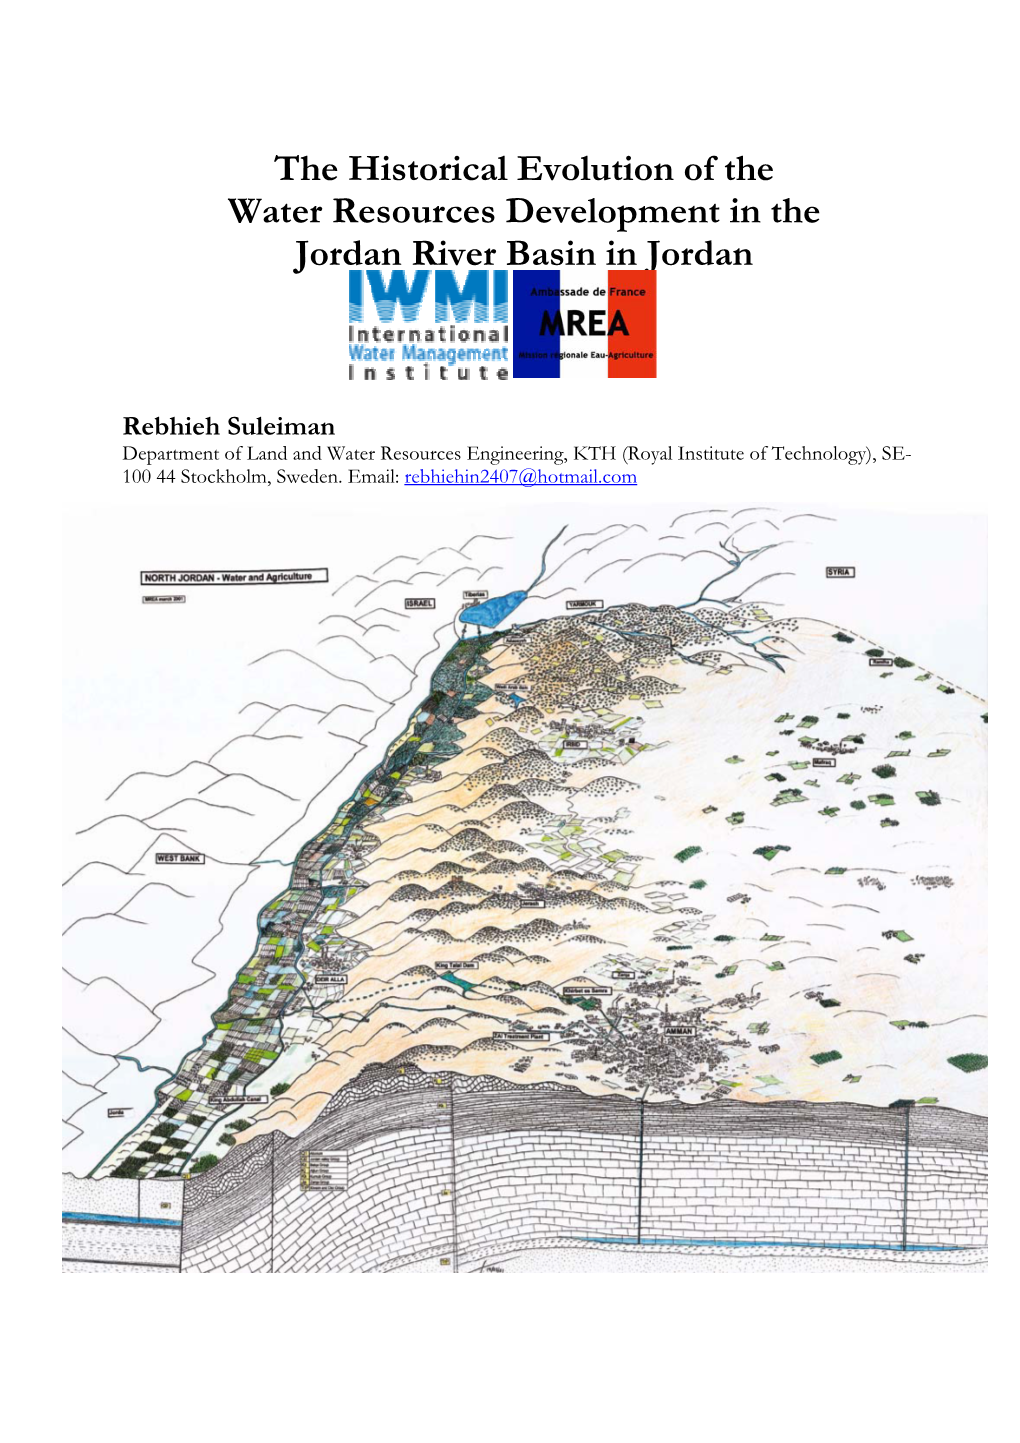 The Historical Evolution of the Water Resources Development in the Jordan River Basin in Jordan